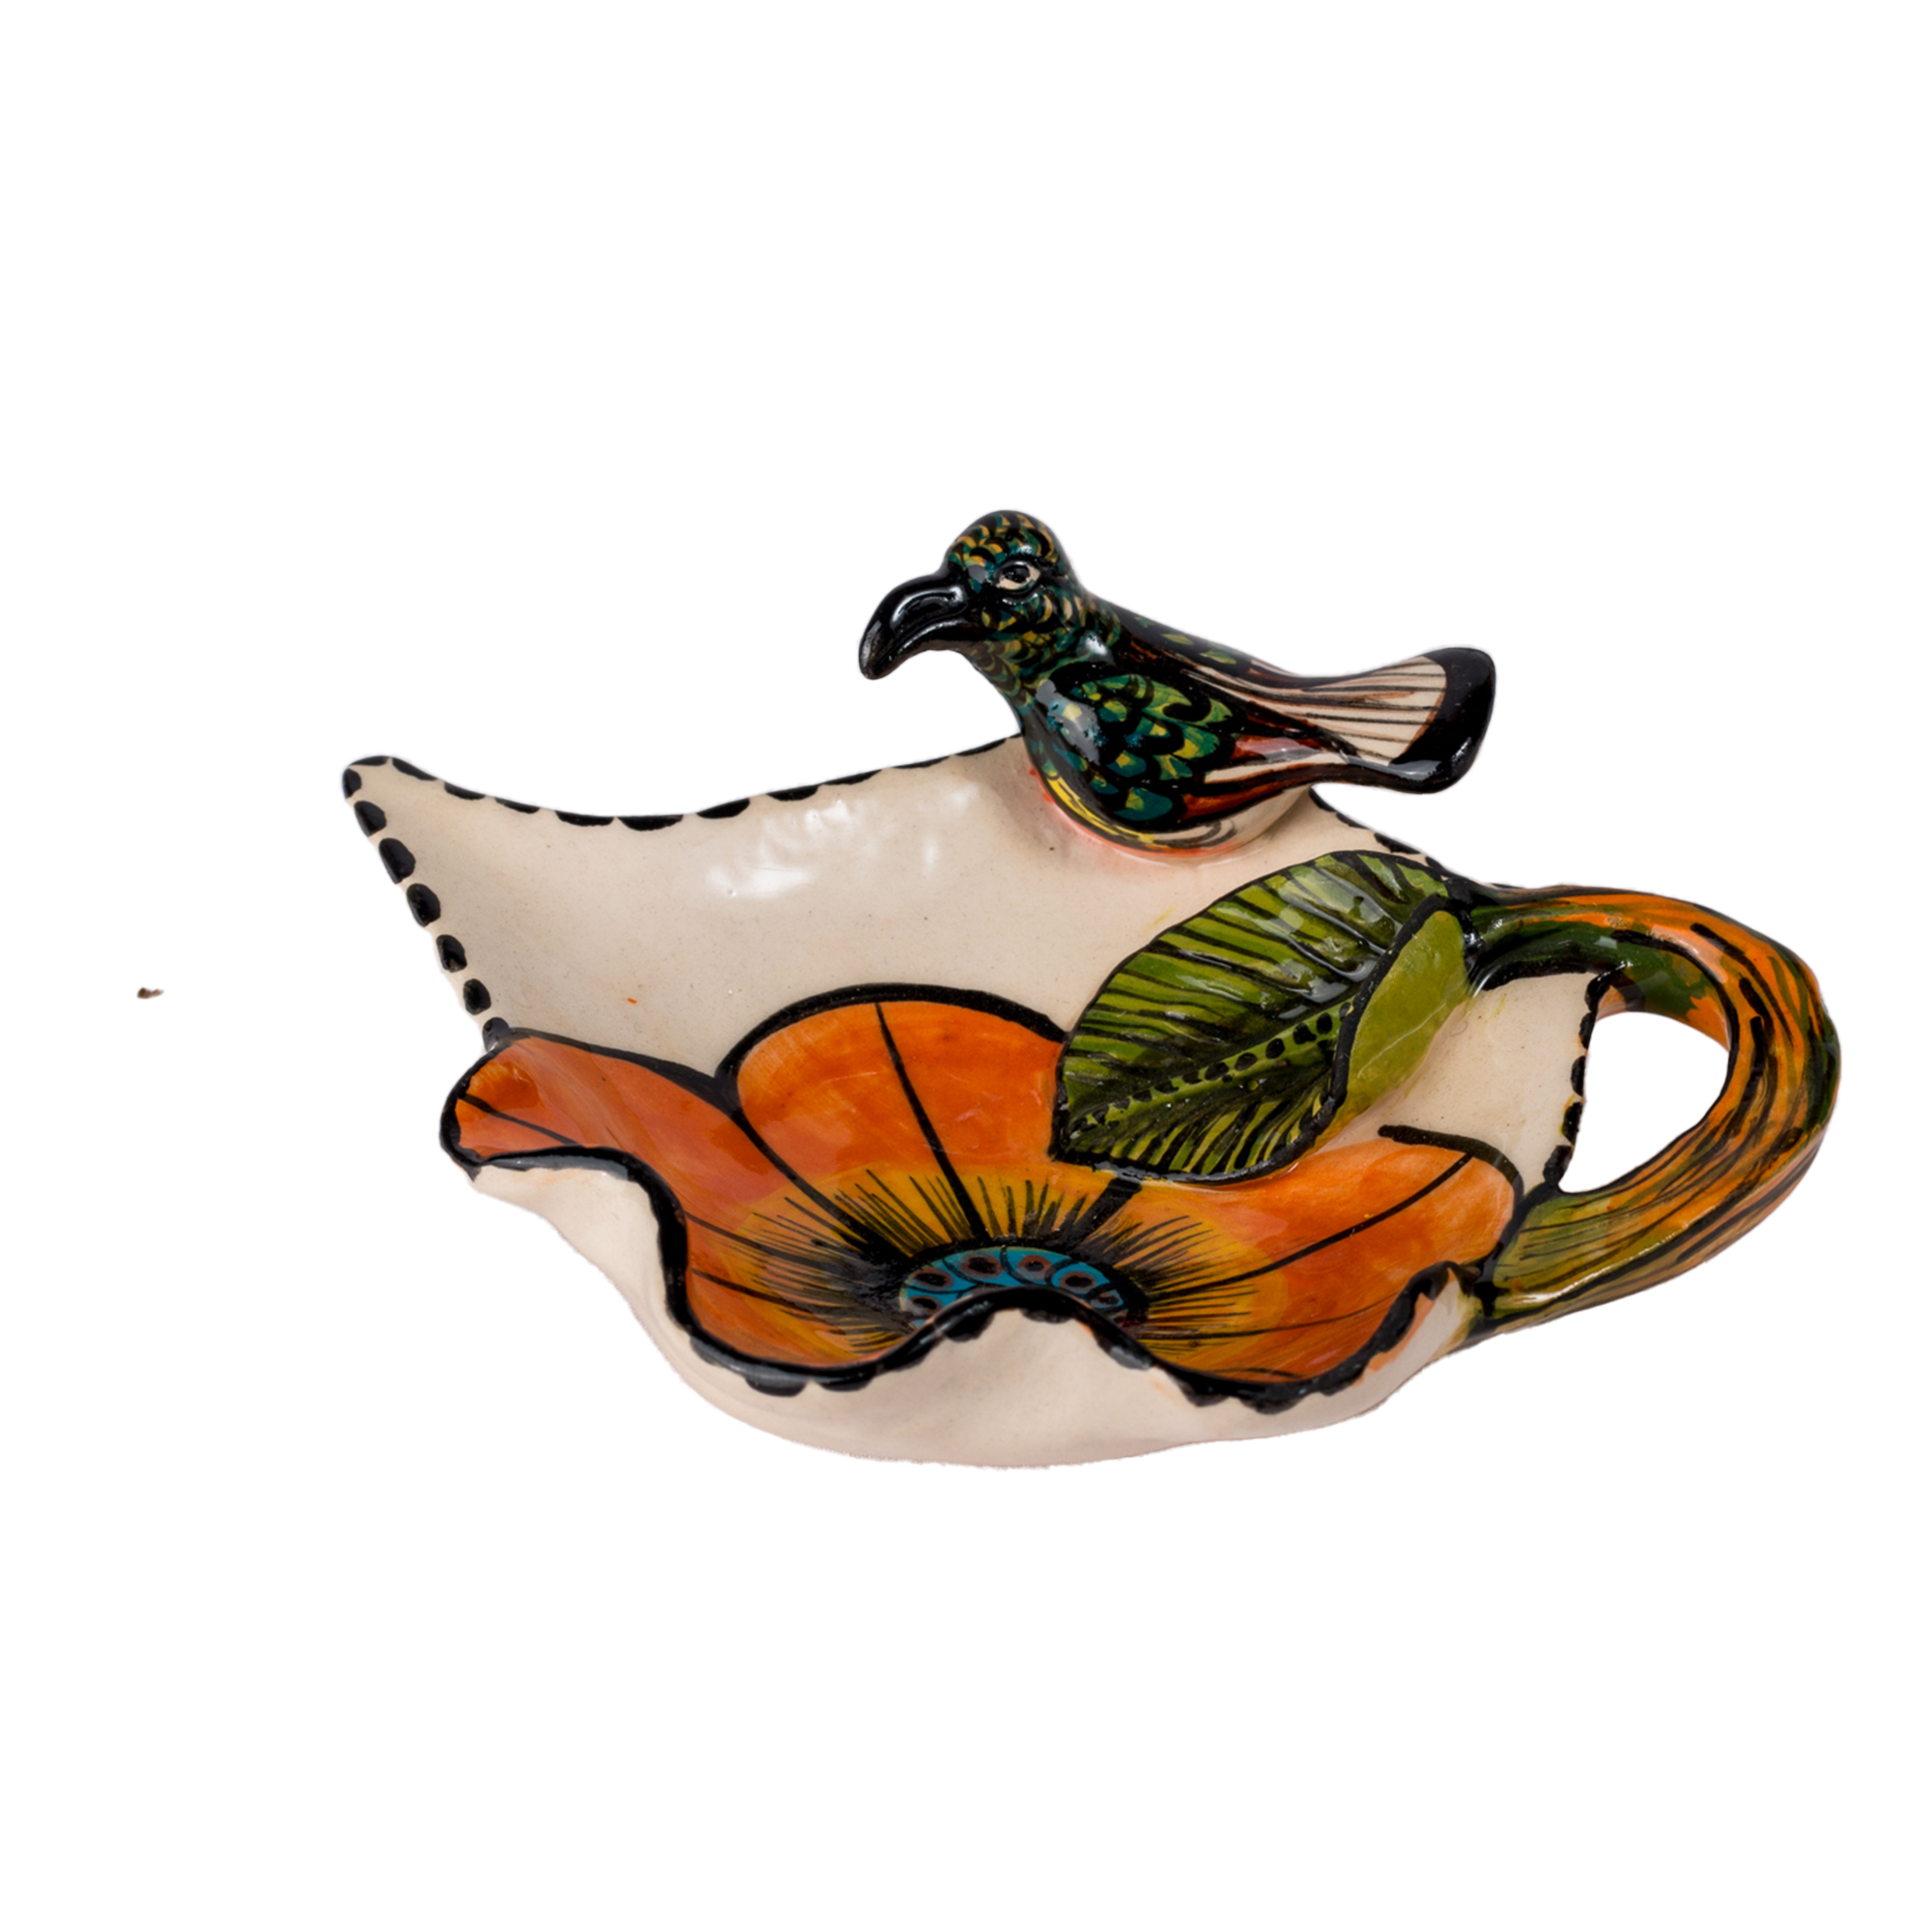 3D Ceramic Small Bird Teabag Holder